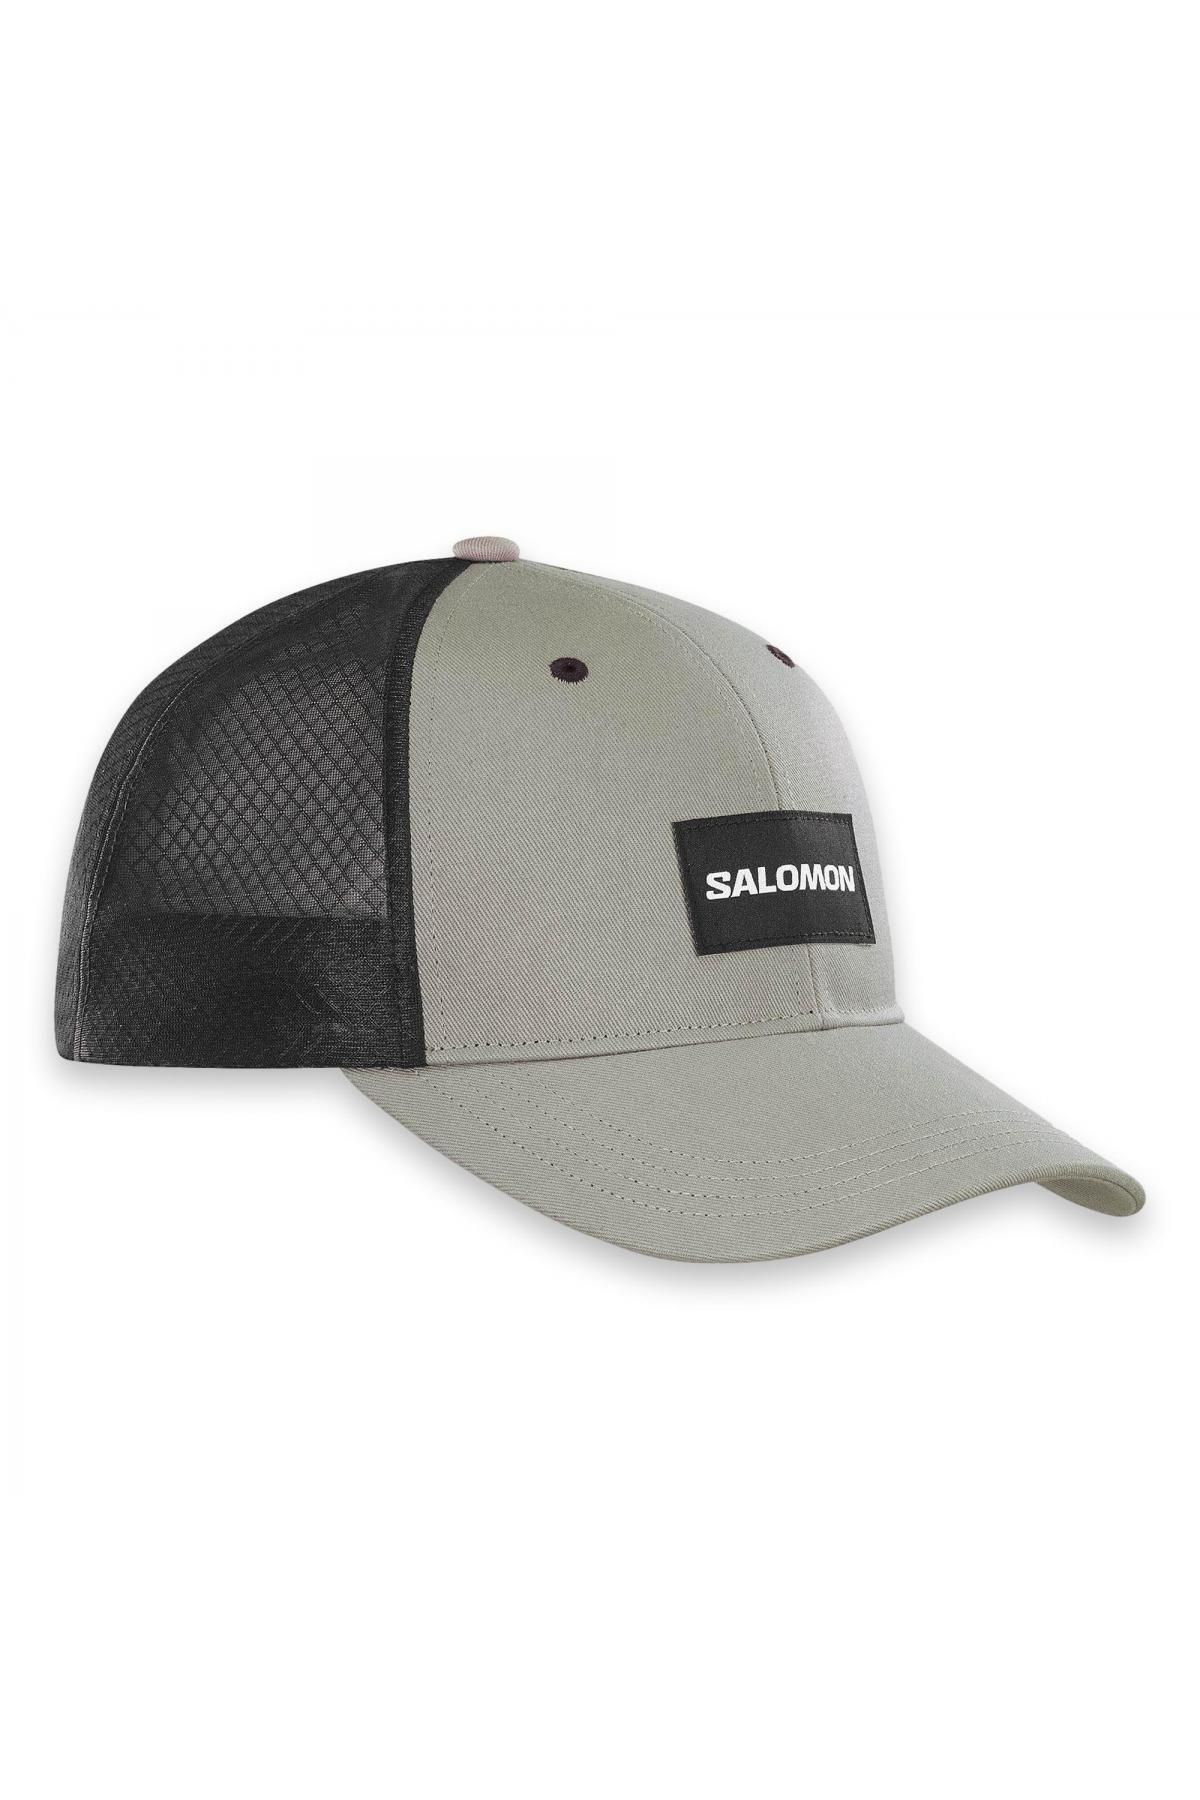 Salomon Lc2024100 Trucker Curved Cap Gri Unisex Şapka